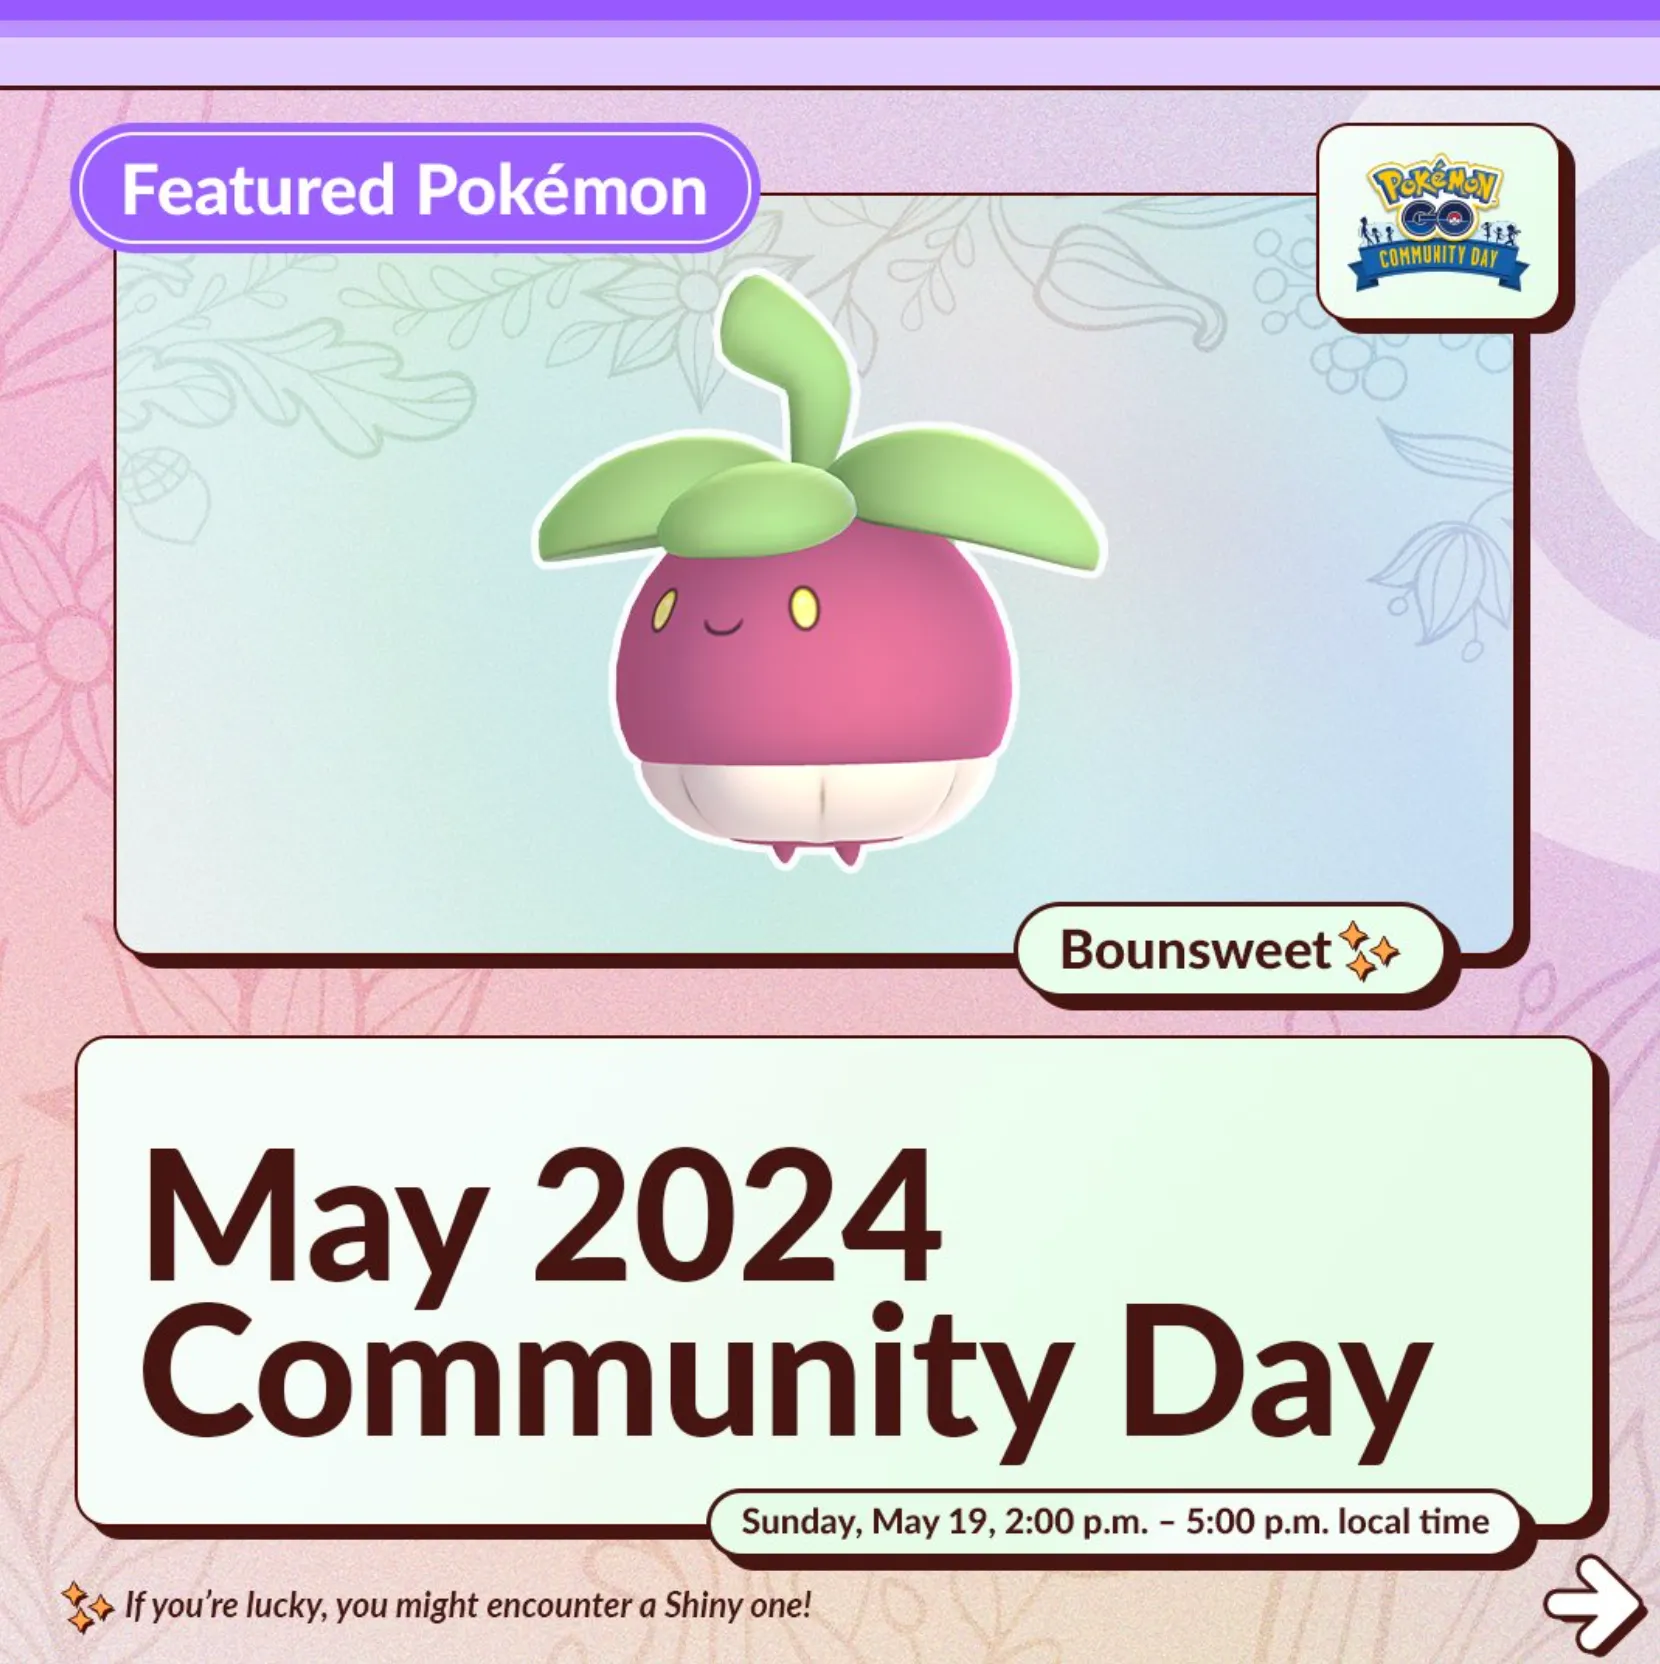 Pokemon Go May 2024 Community Day Bounsweet.png